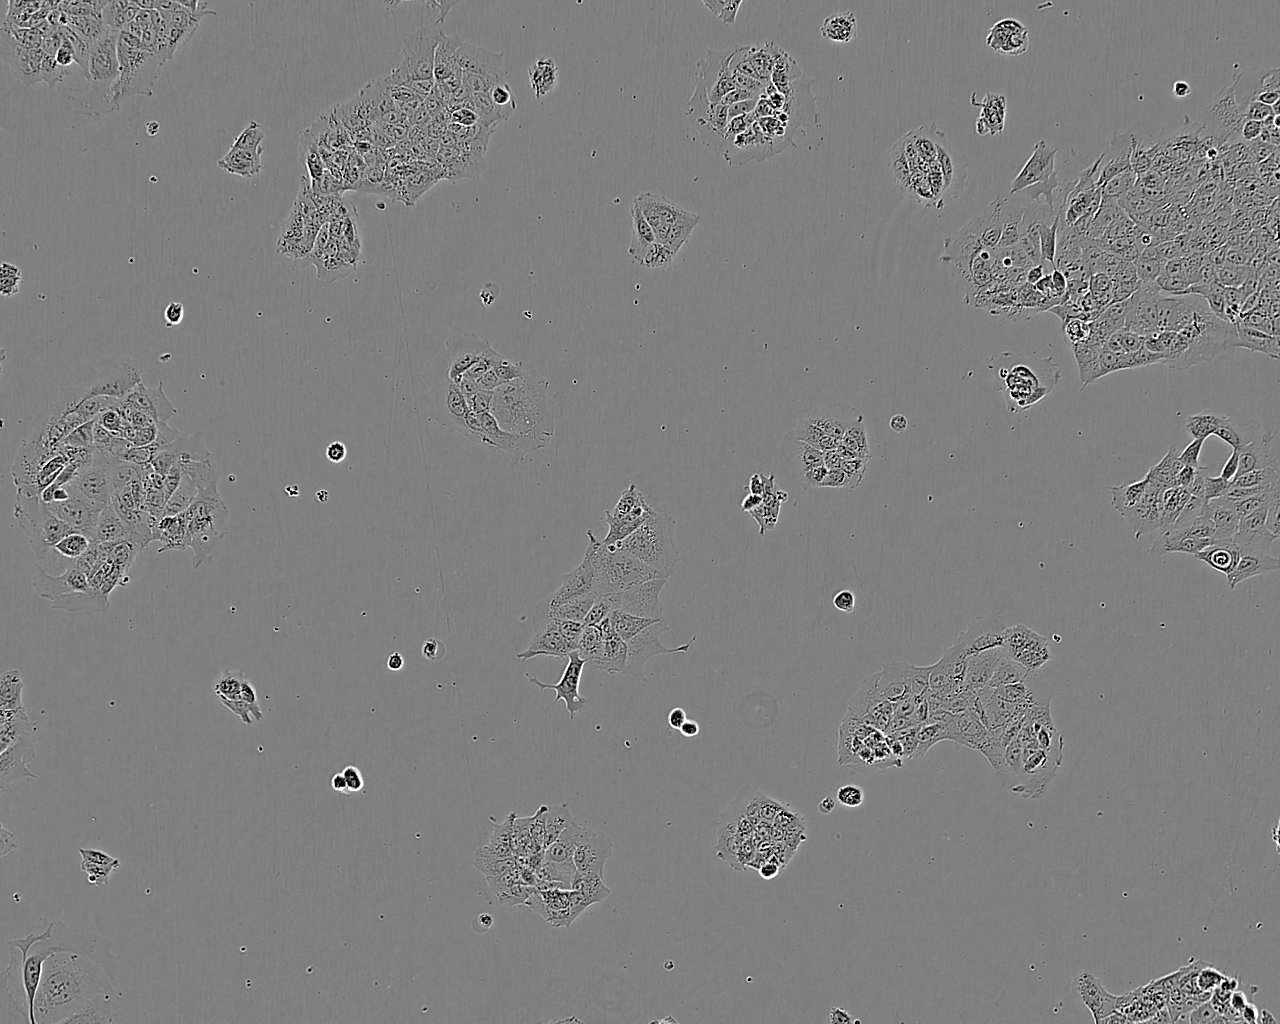 BHK-21 仓鼠肾成纤维细胞系,BHK-21